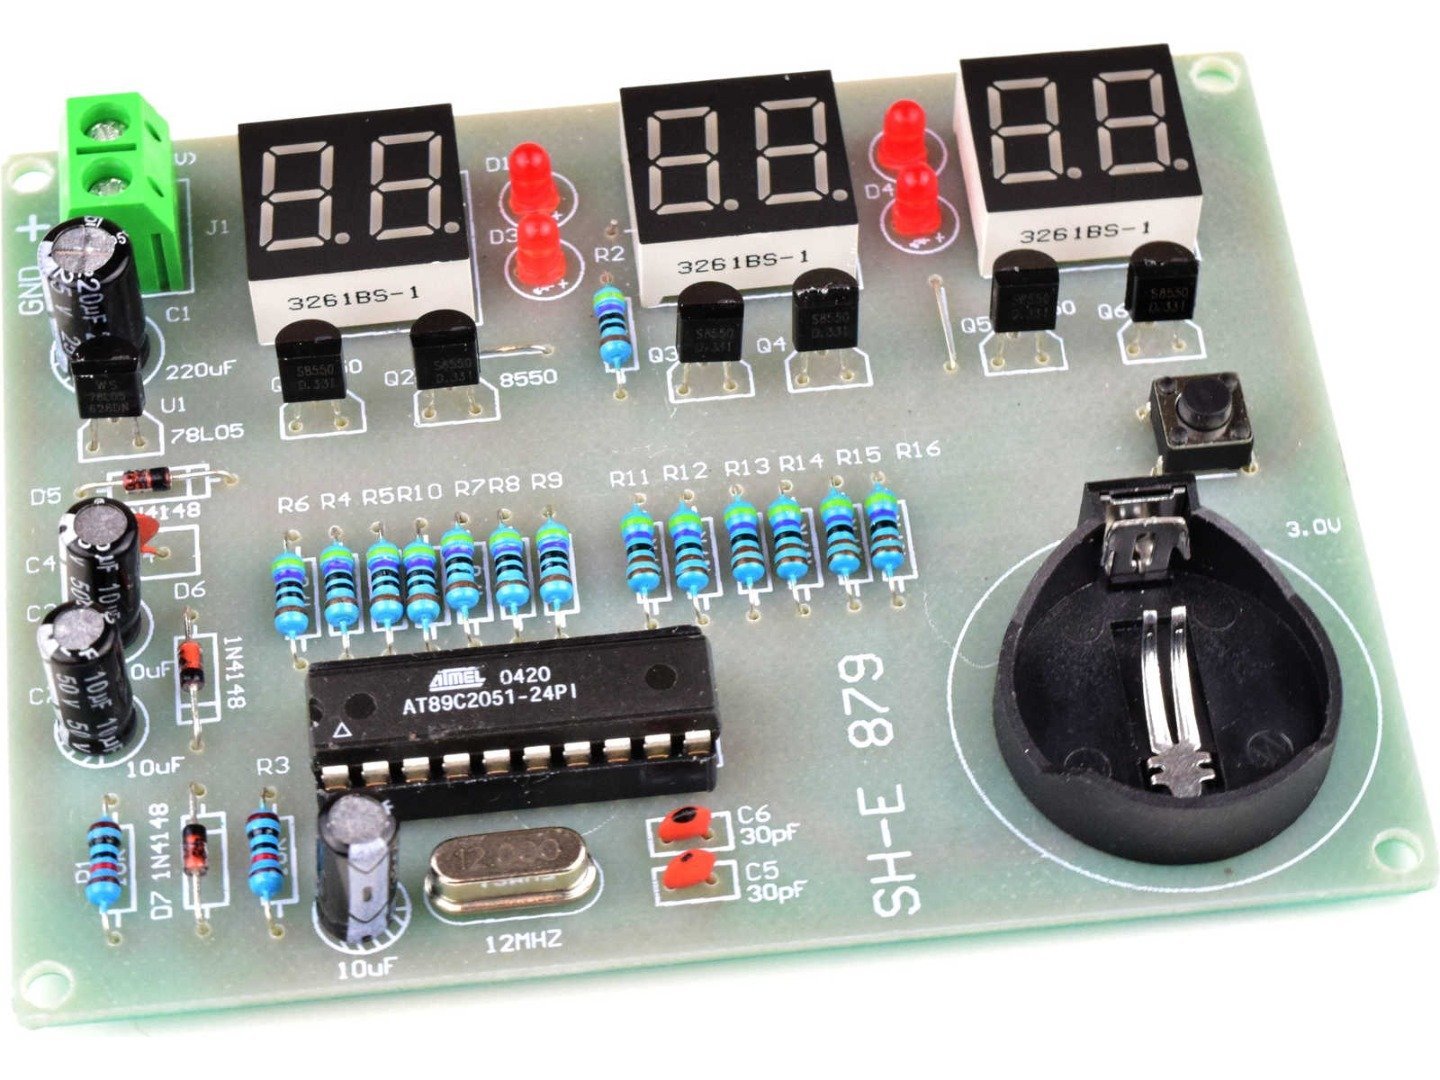 Digital LED Clock 6-Digit, DIY kit based on AT89C2051 8